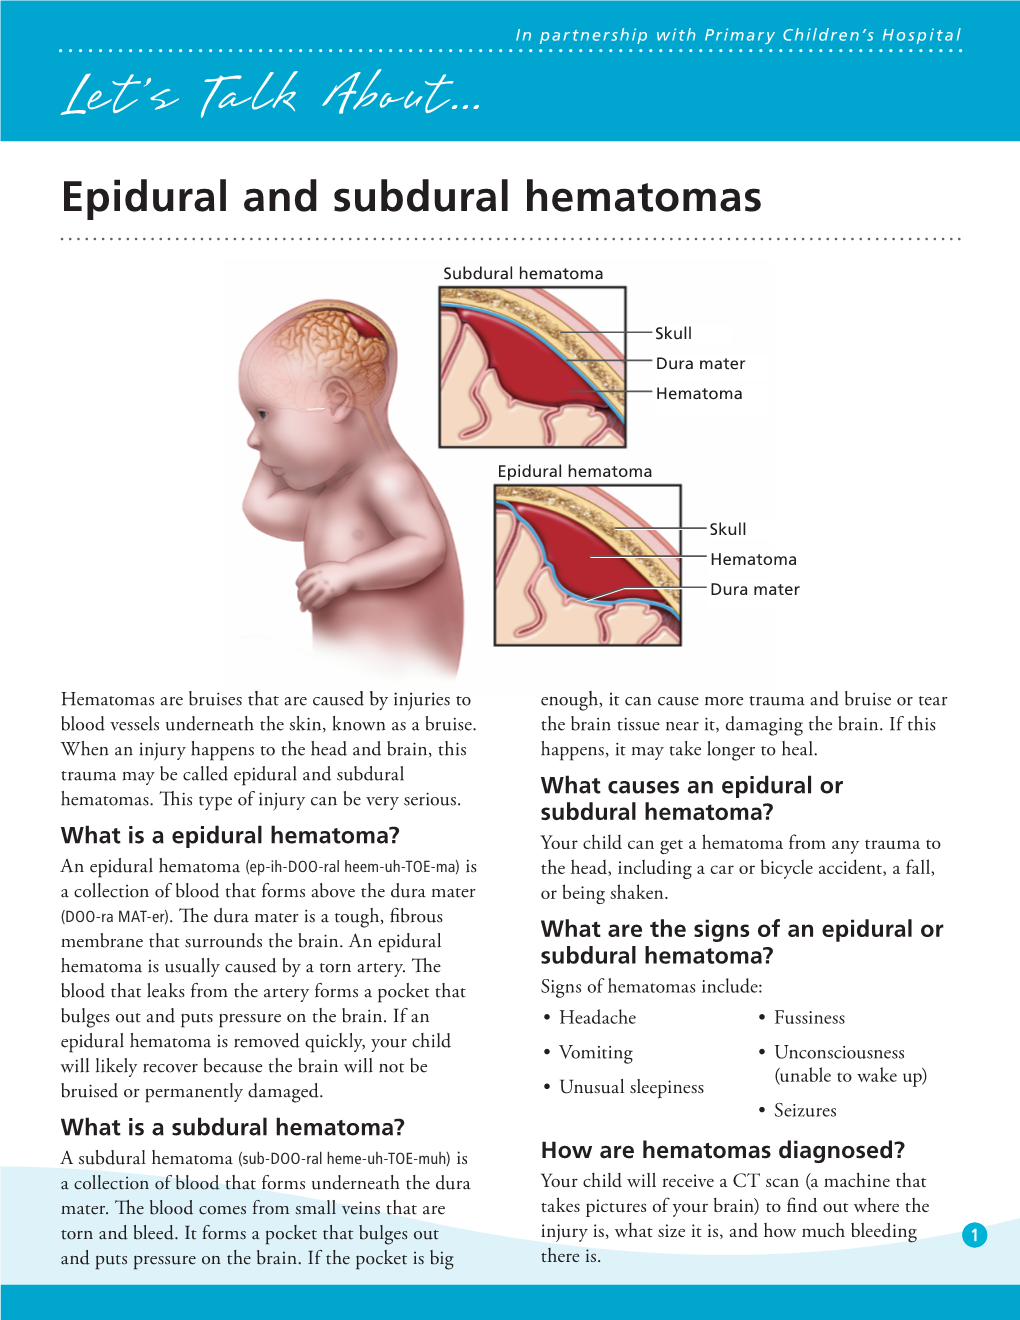 Epidural and Subdural Hematomas